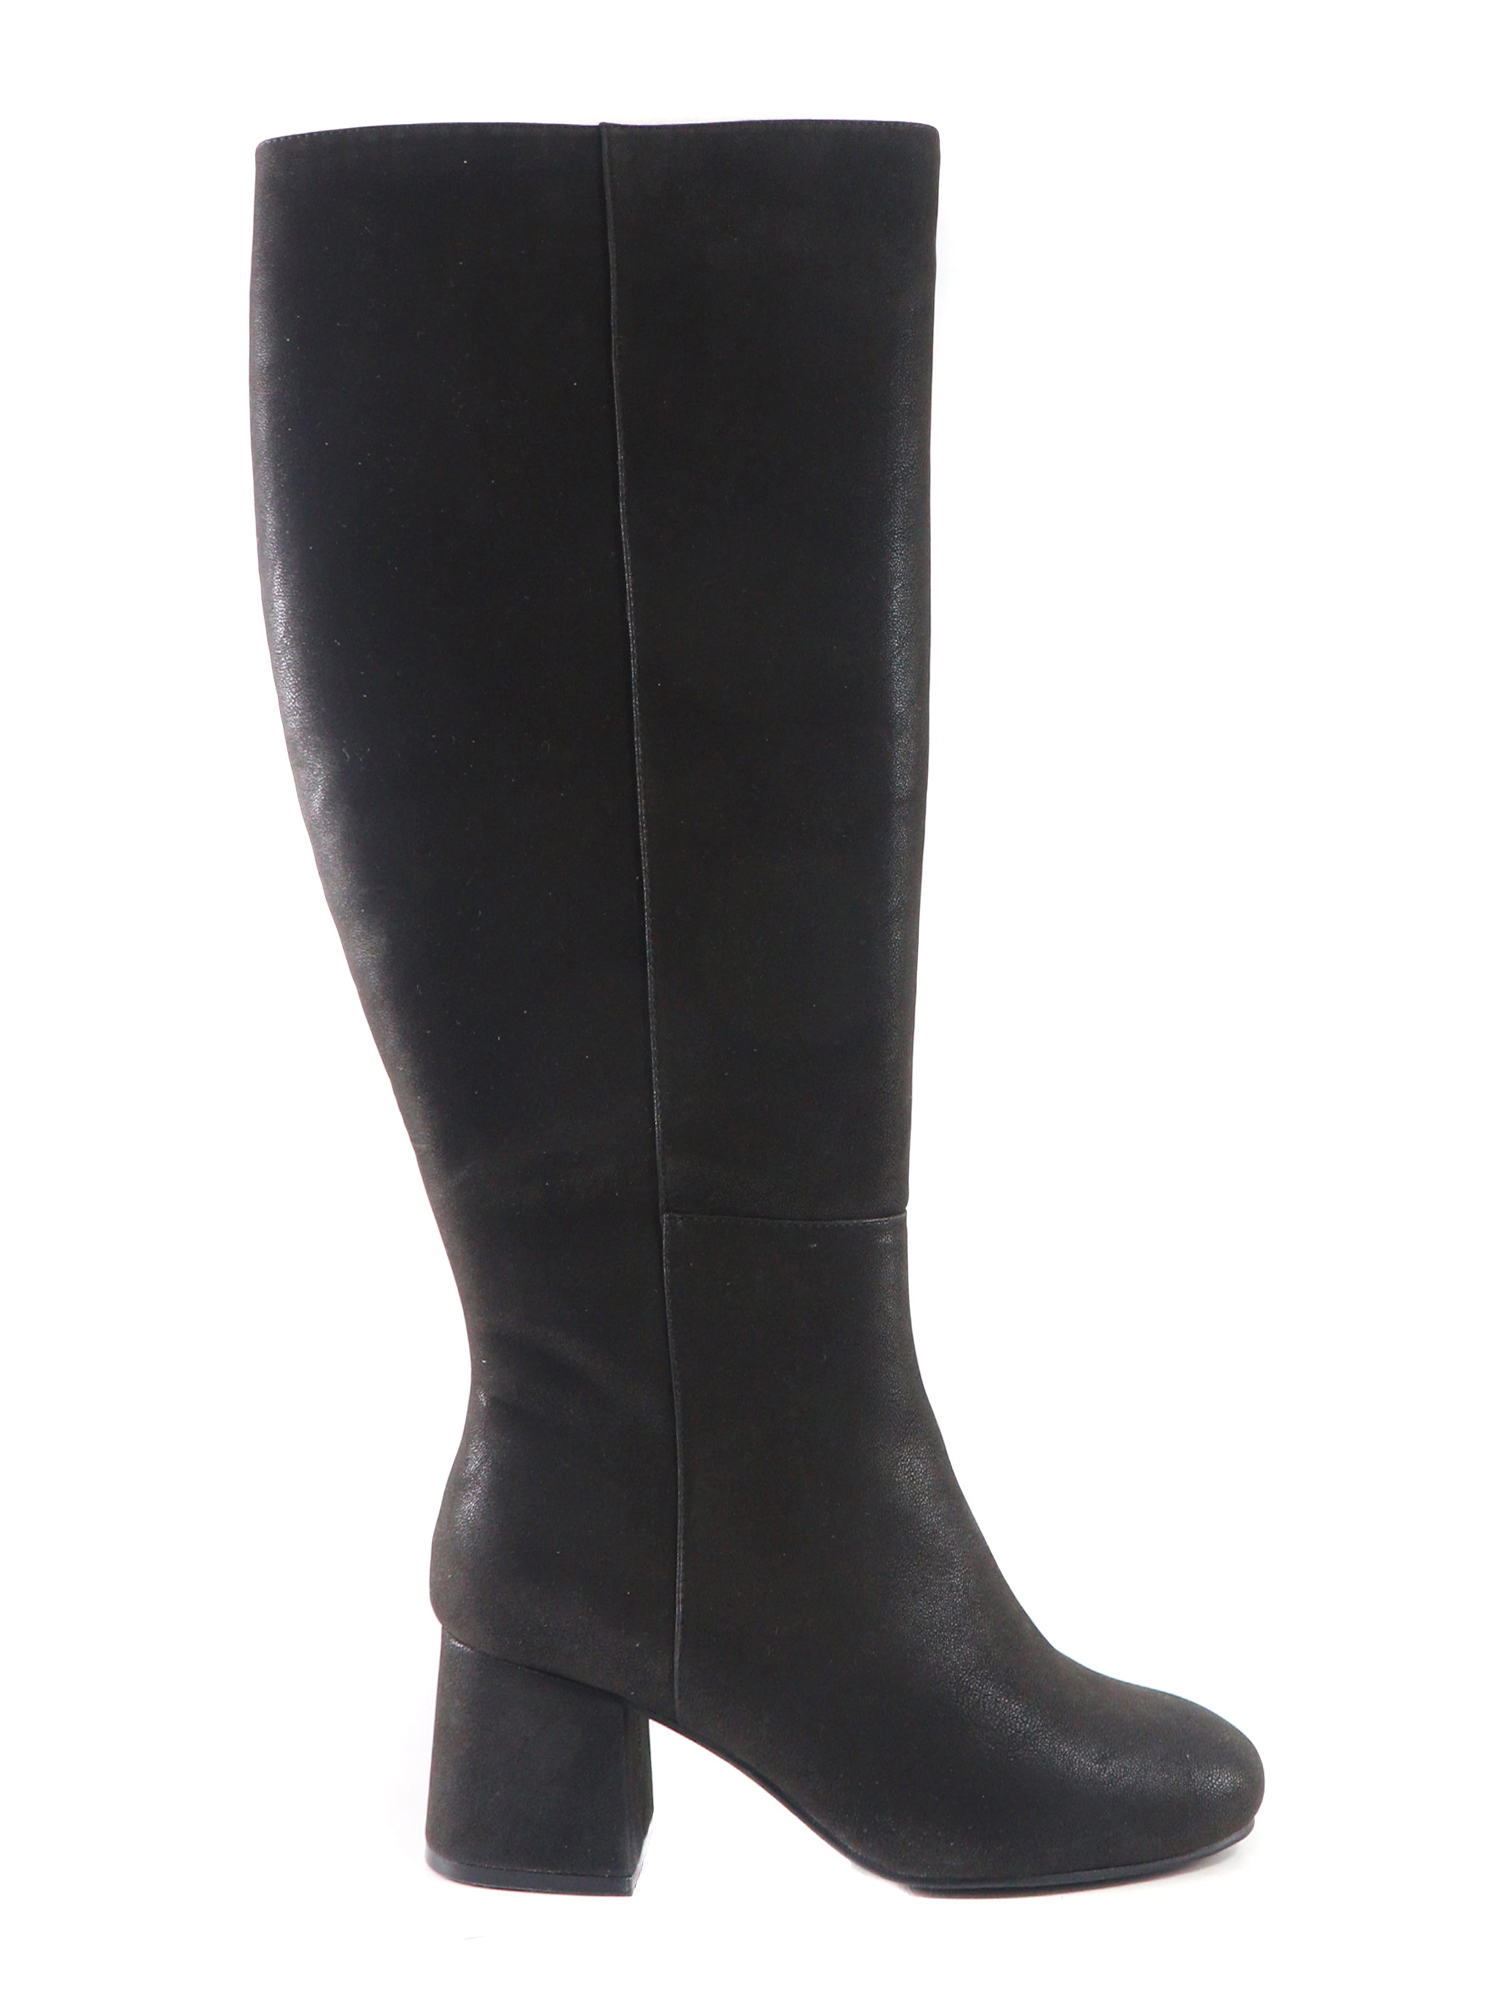 Eloquii Elements Women's Extra Wide Calf Block Heel Dress Boots ...